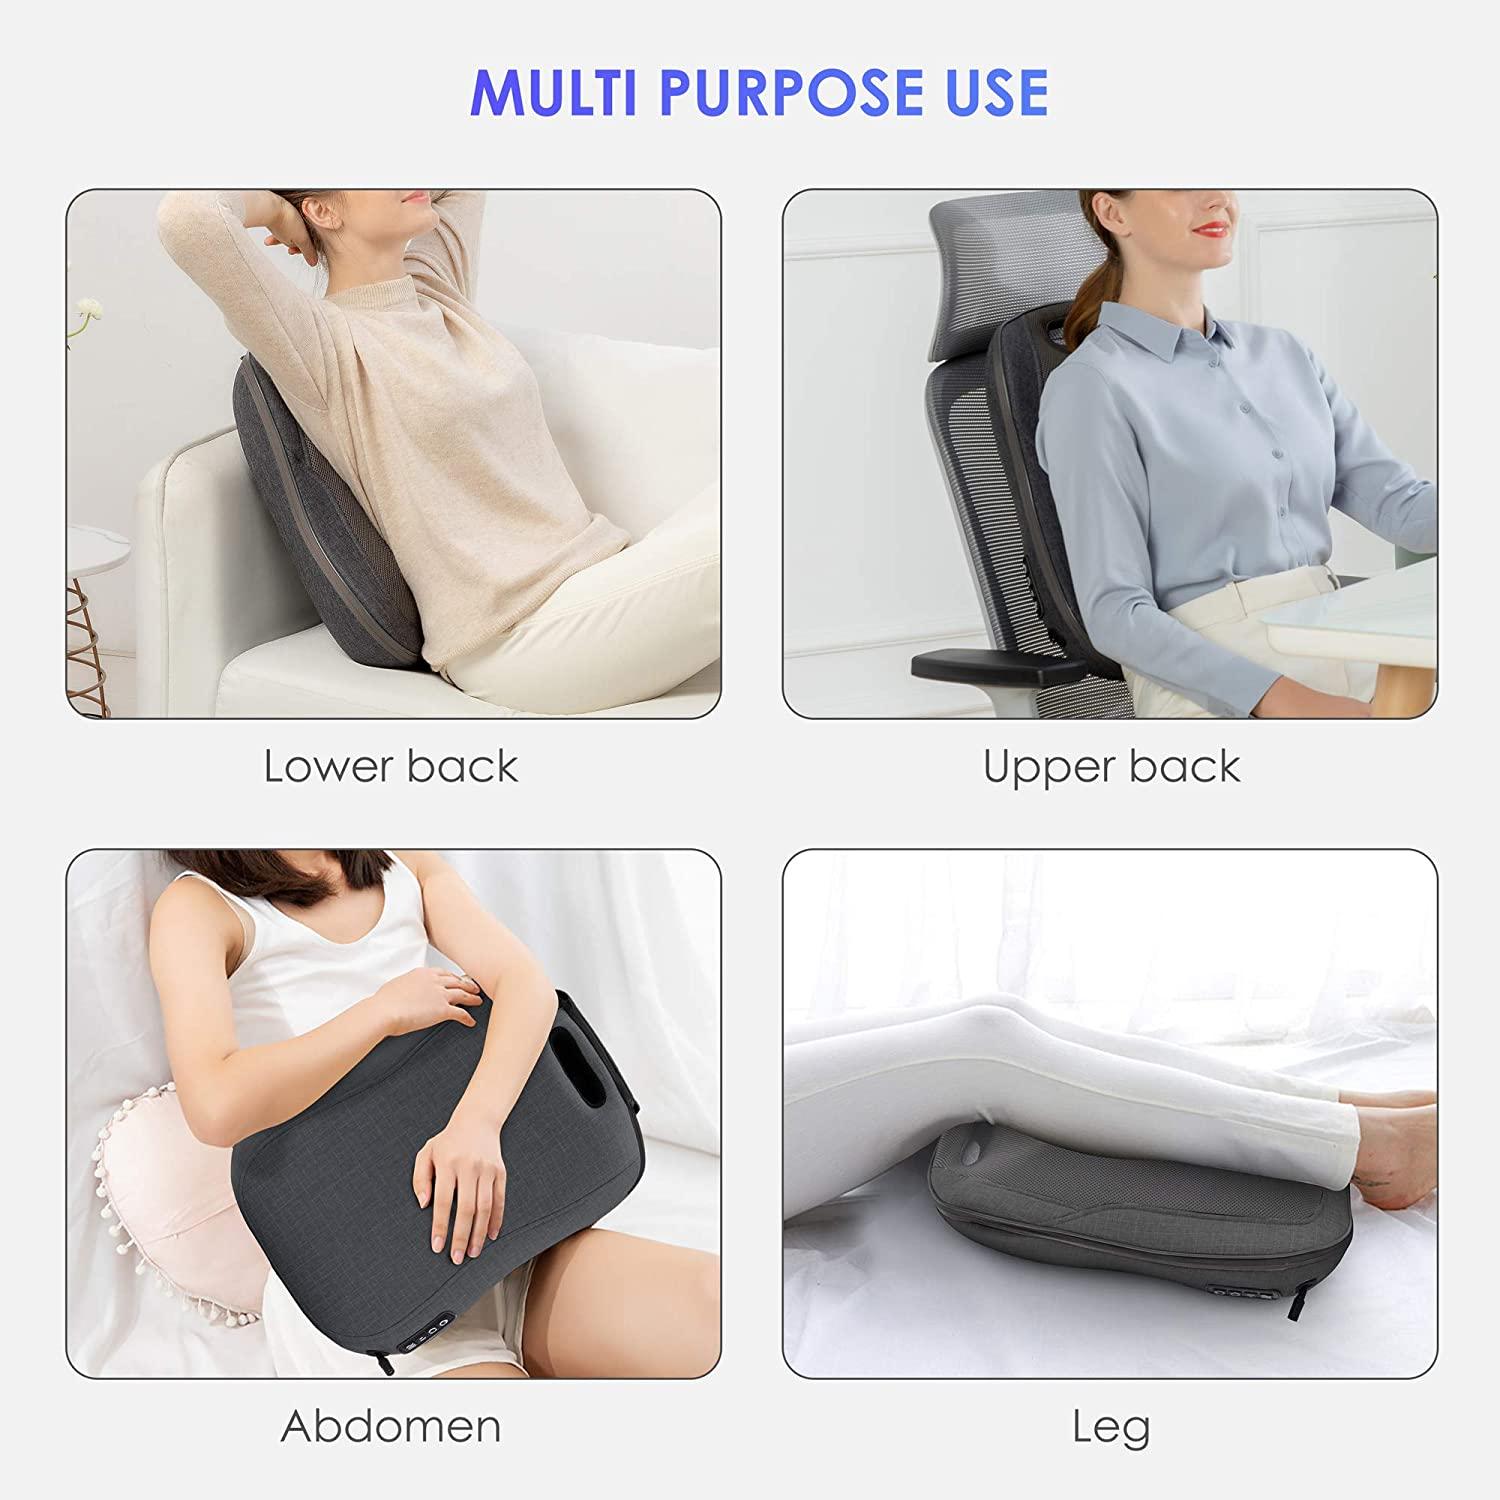 Snailax Shiatsu Full Back Massager with Heat, Adjustable Chair Massager  pad, Rolling Massage Seat Cushion, Gifts